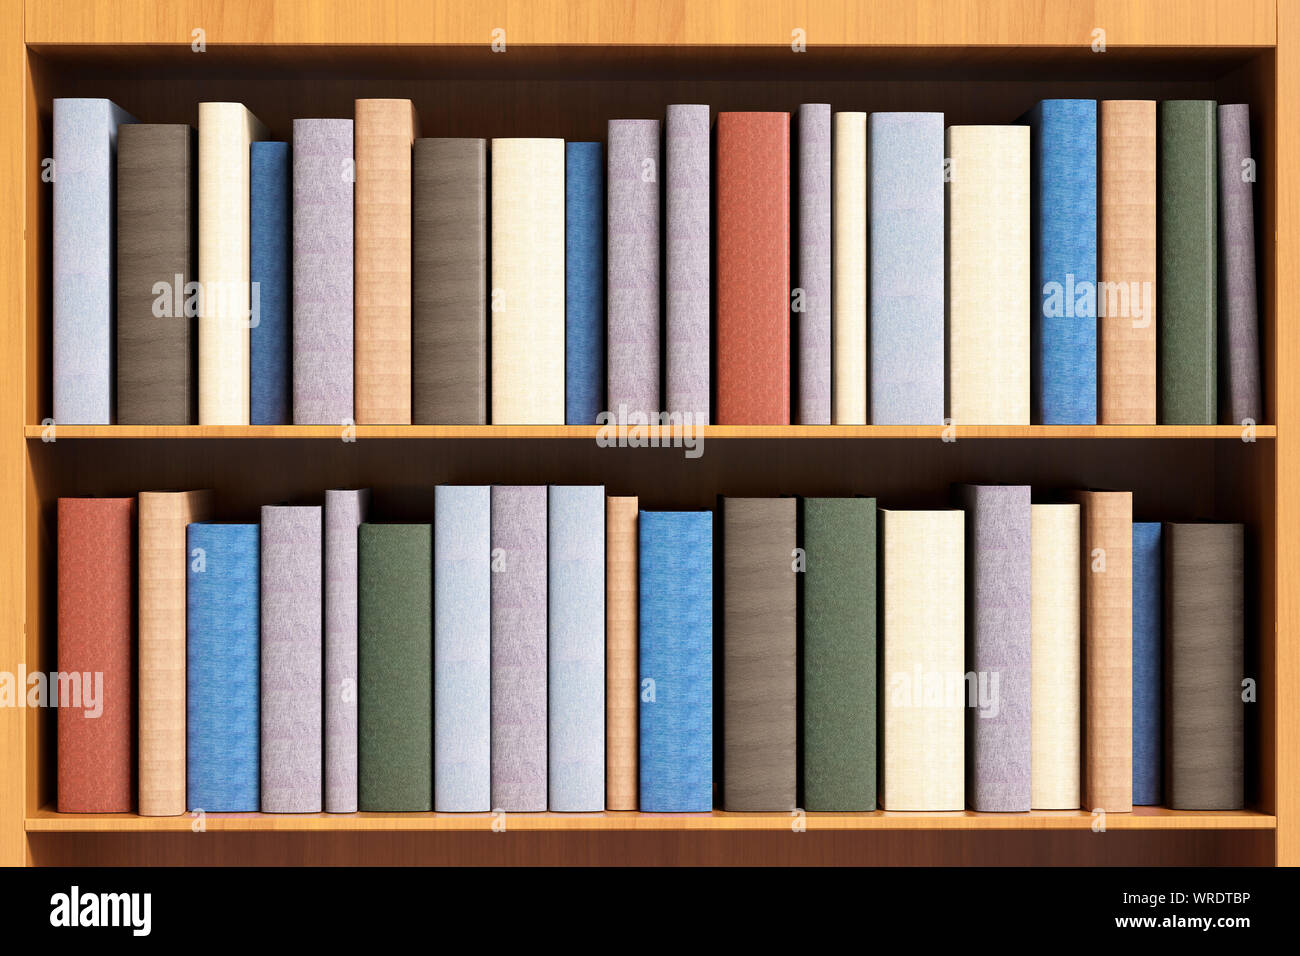 Estantería de madera con dos estantes llenos de libros de tapa dura con espinas en blanco Foto de stock